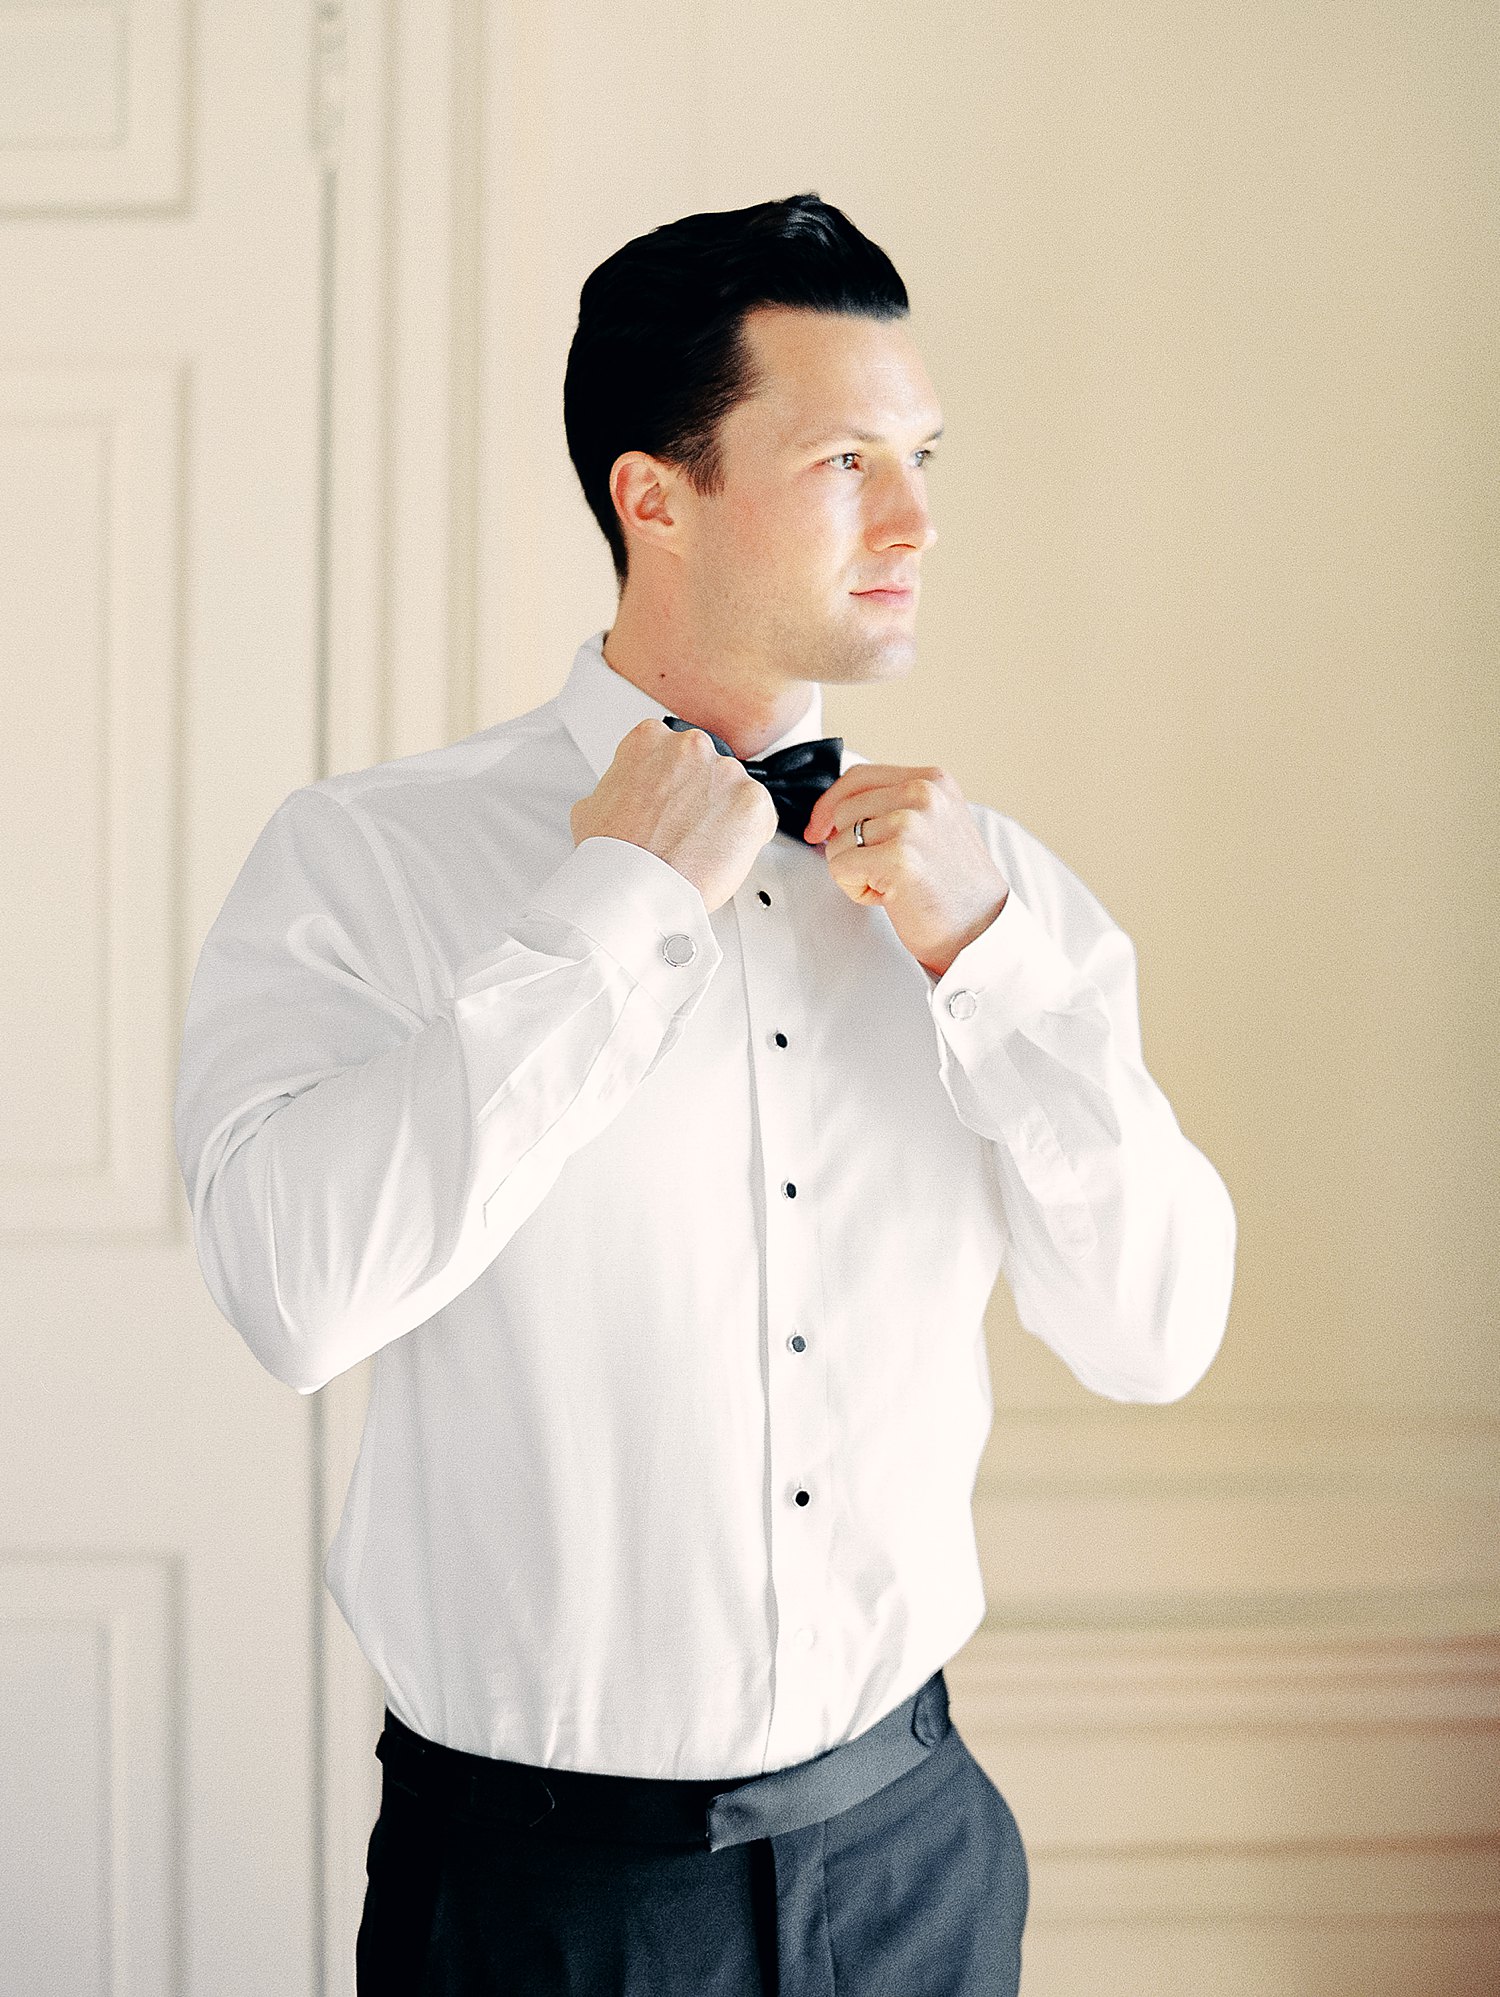 man in white shirt putting on black bowtie